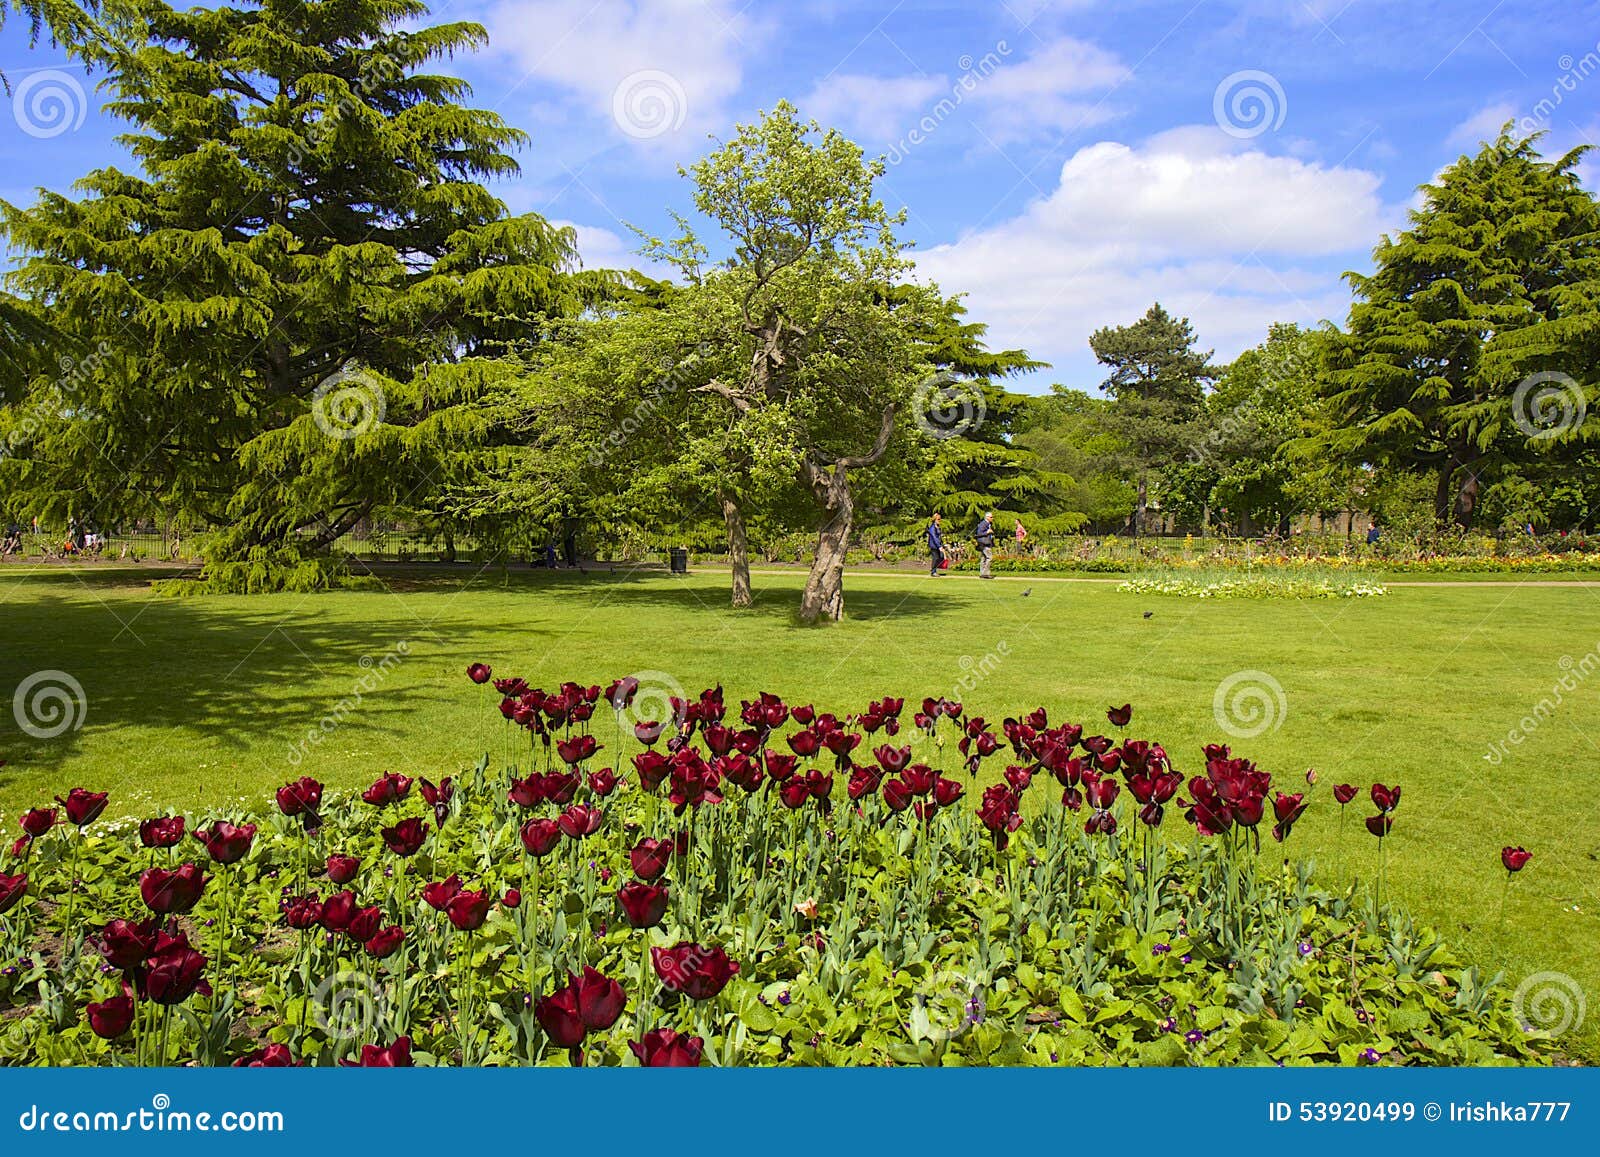 flower garden in greenwich park, london editorial stock image